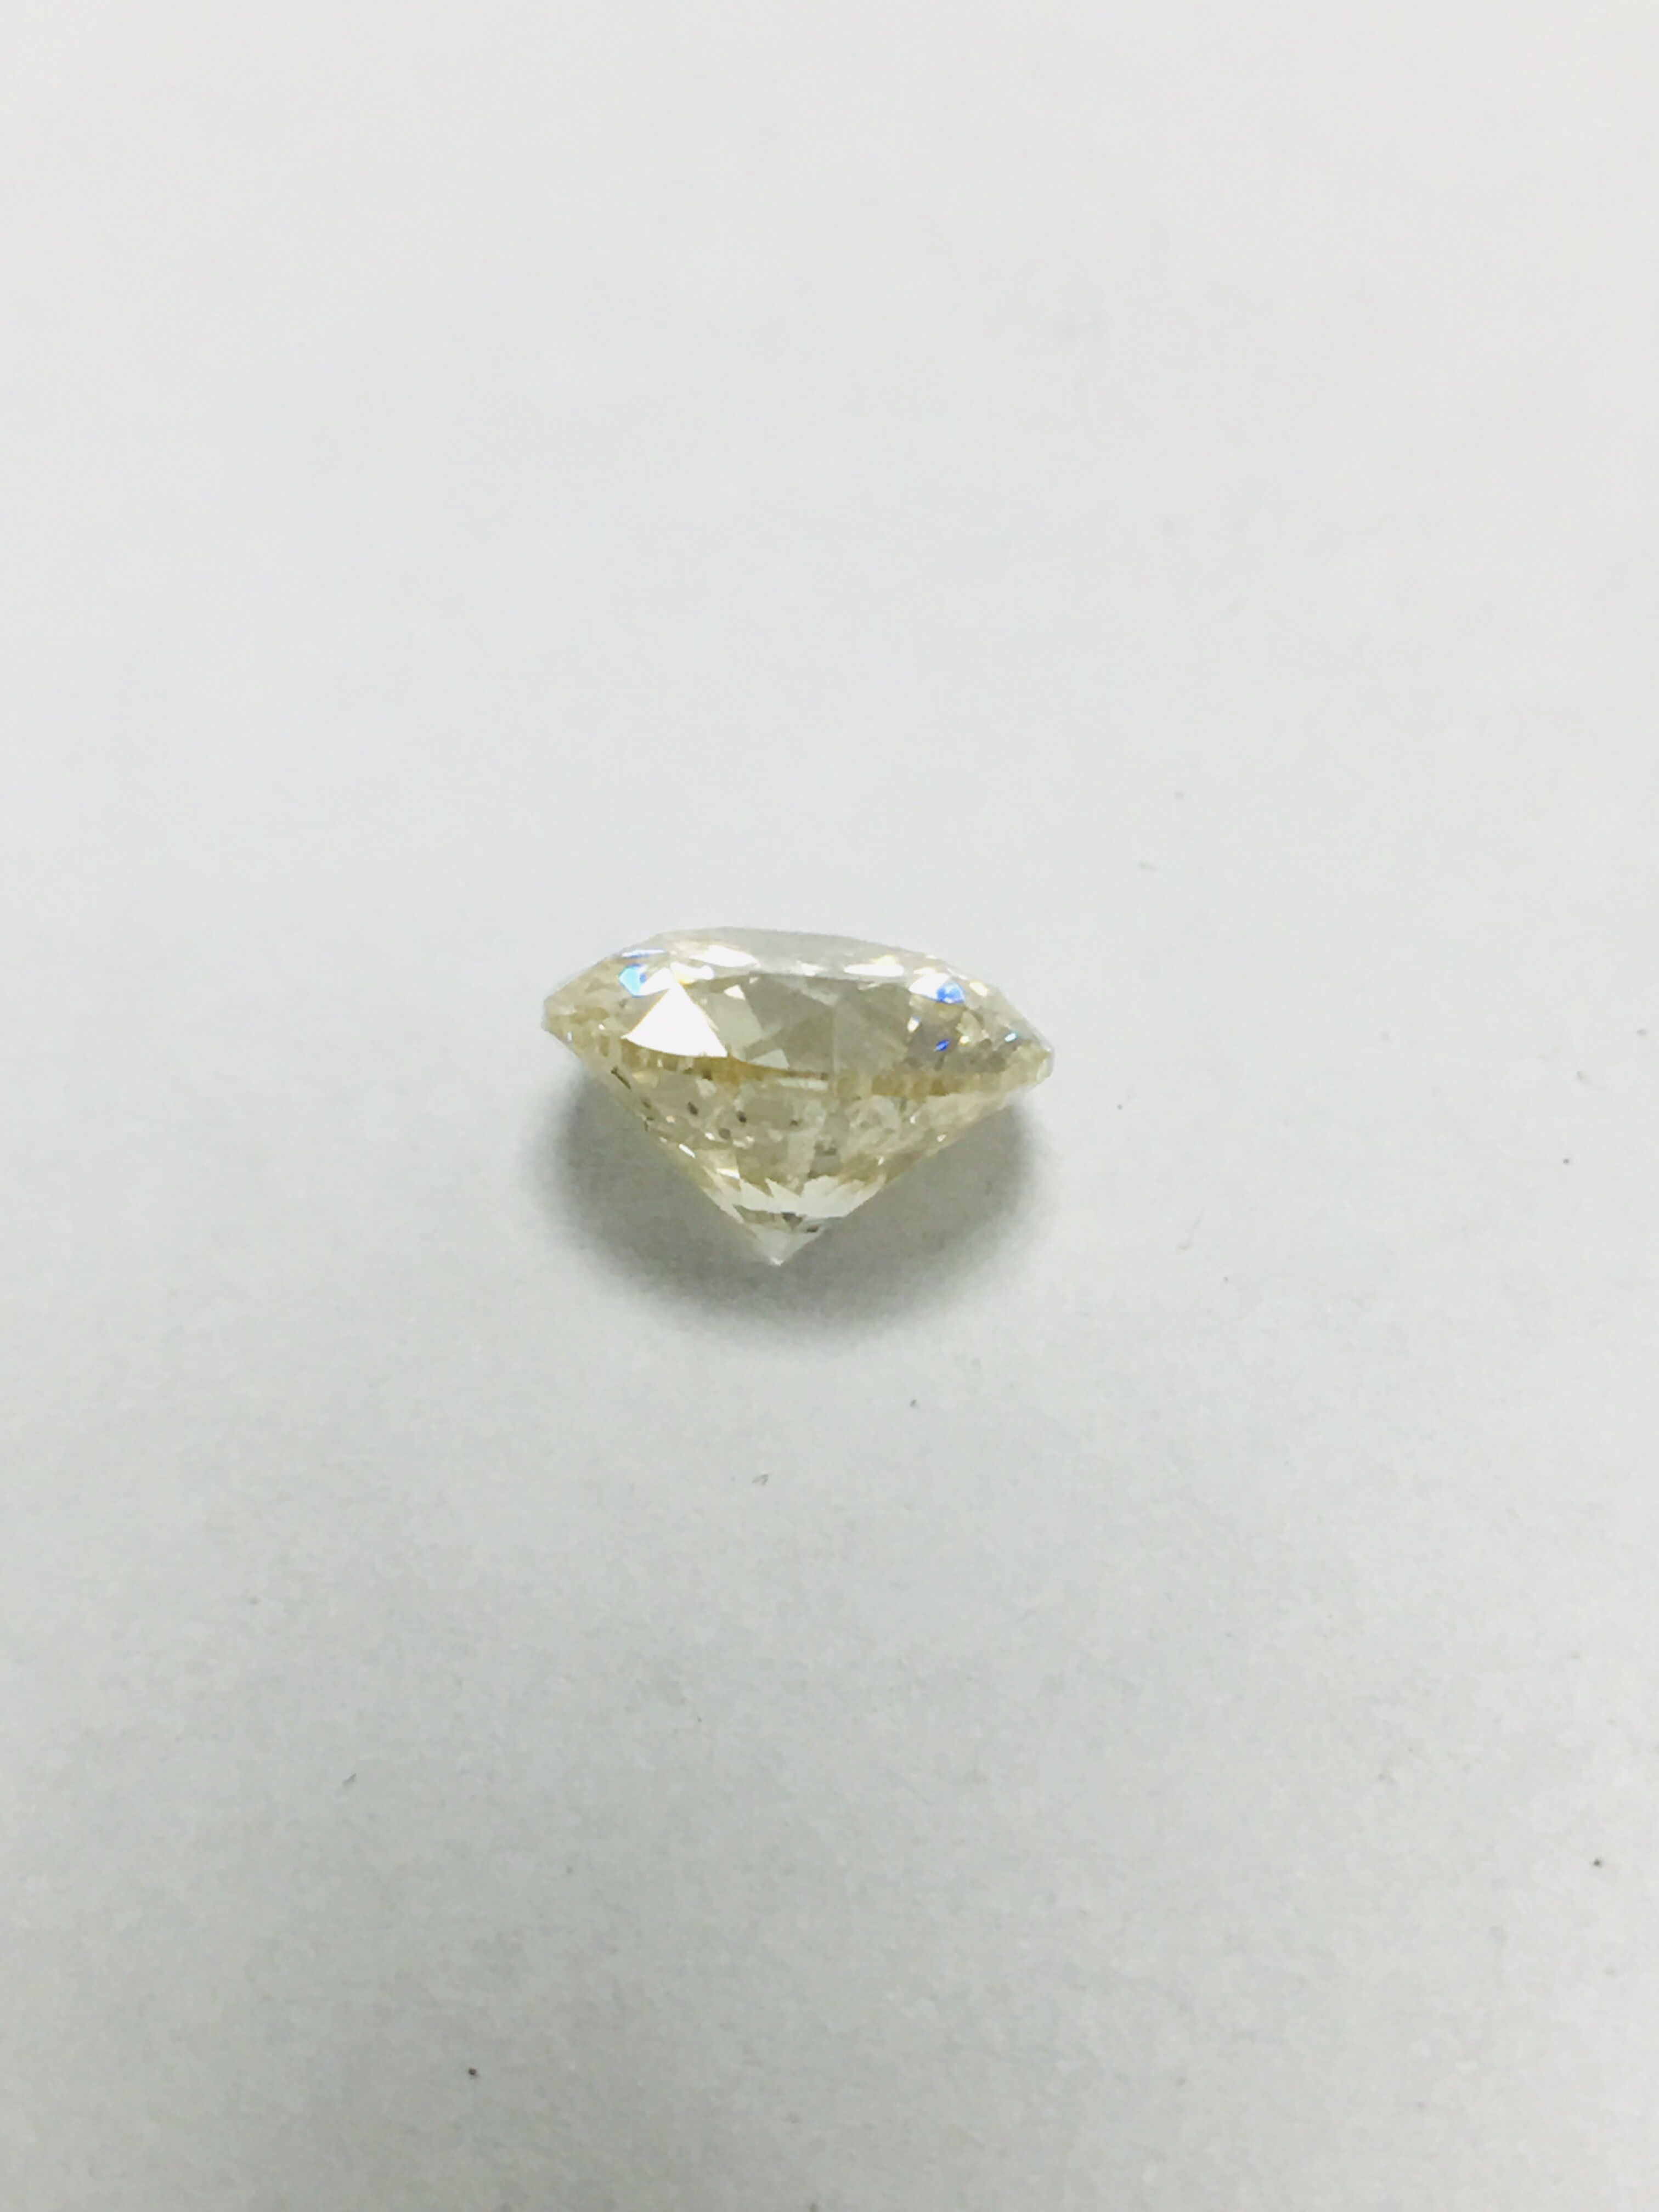 1.55ct Natural Brilliant cut DiamondSI2 clarity - Image 18 of 35